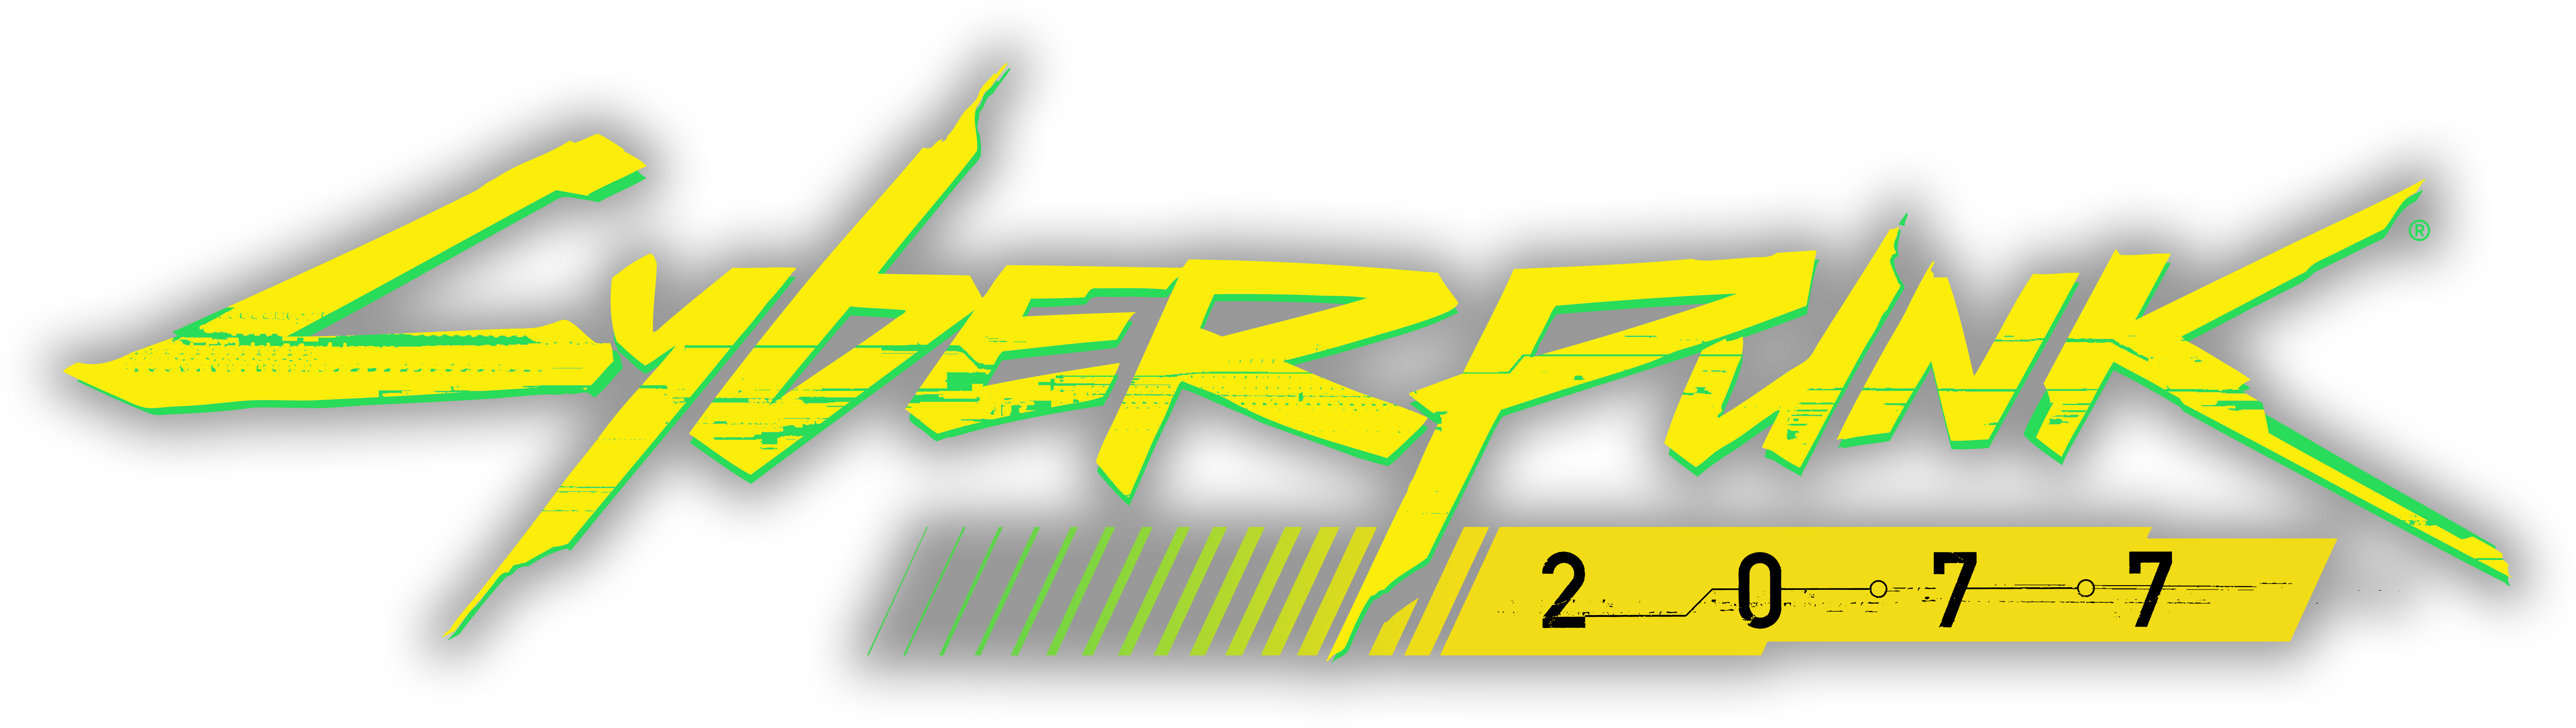 Cyberpunk logo vector фото 56